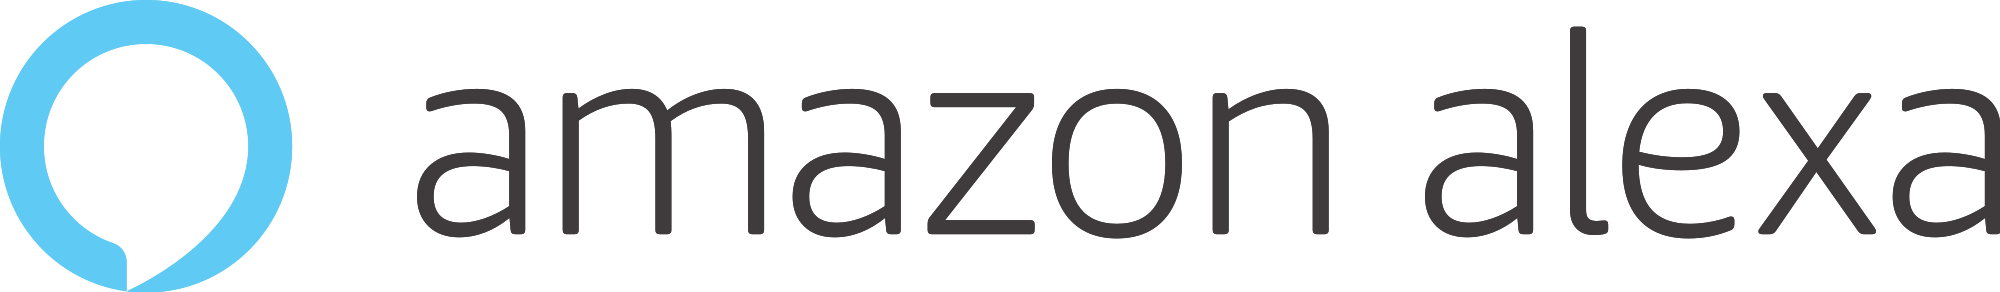 Amazon Alexa Logo - File:Amazon Alexa logo.svg - Wikimedia Commons